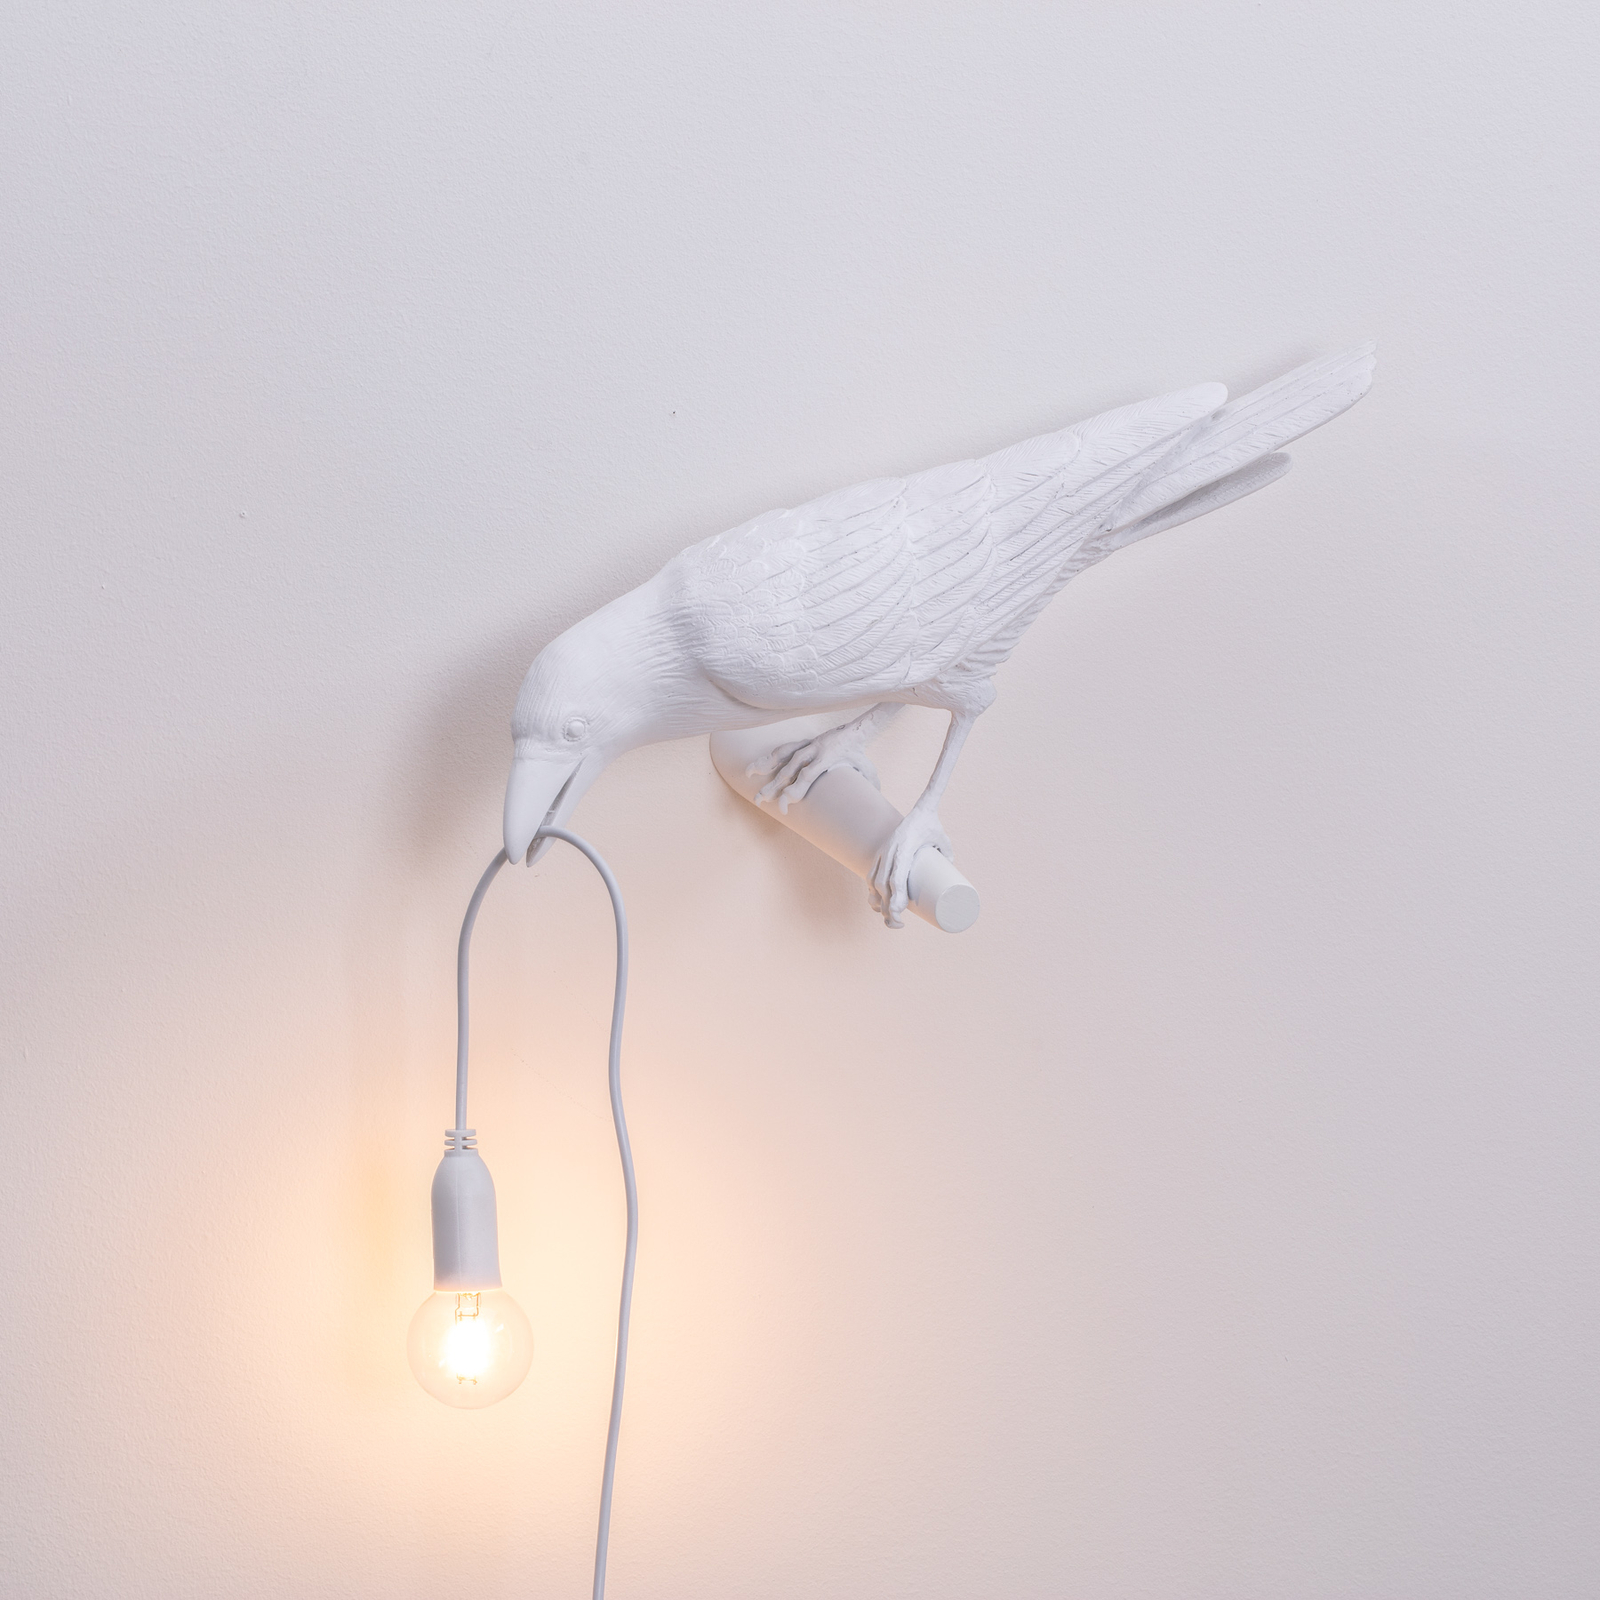 SELETTI Bird Lamp LED-Wandlampe, Blick links, weiß